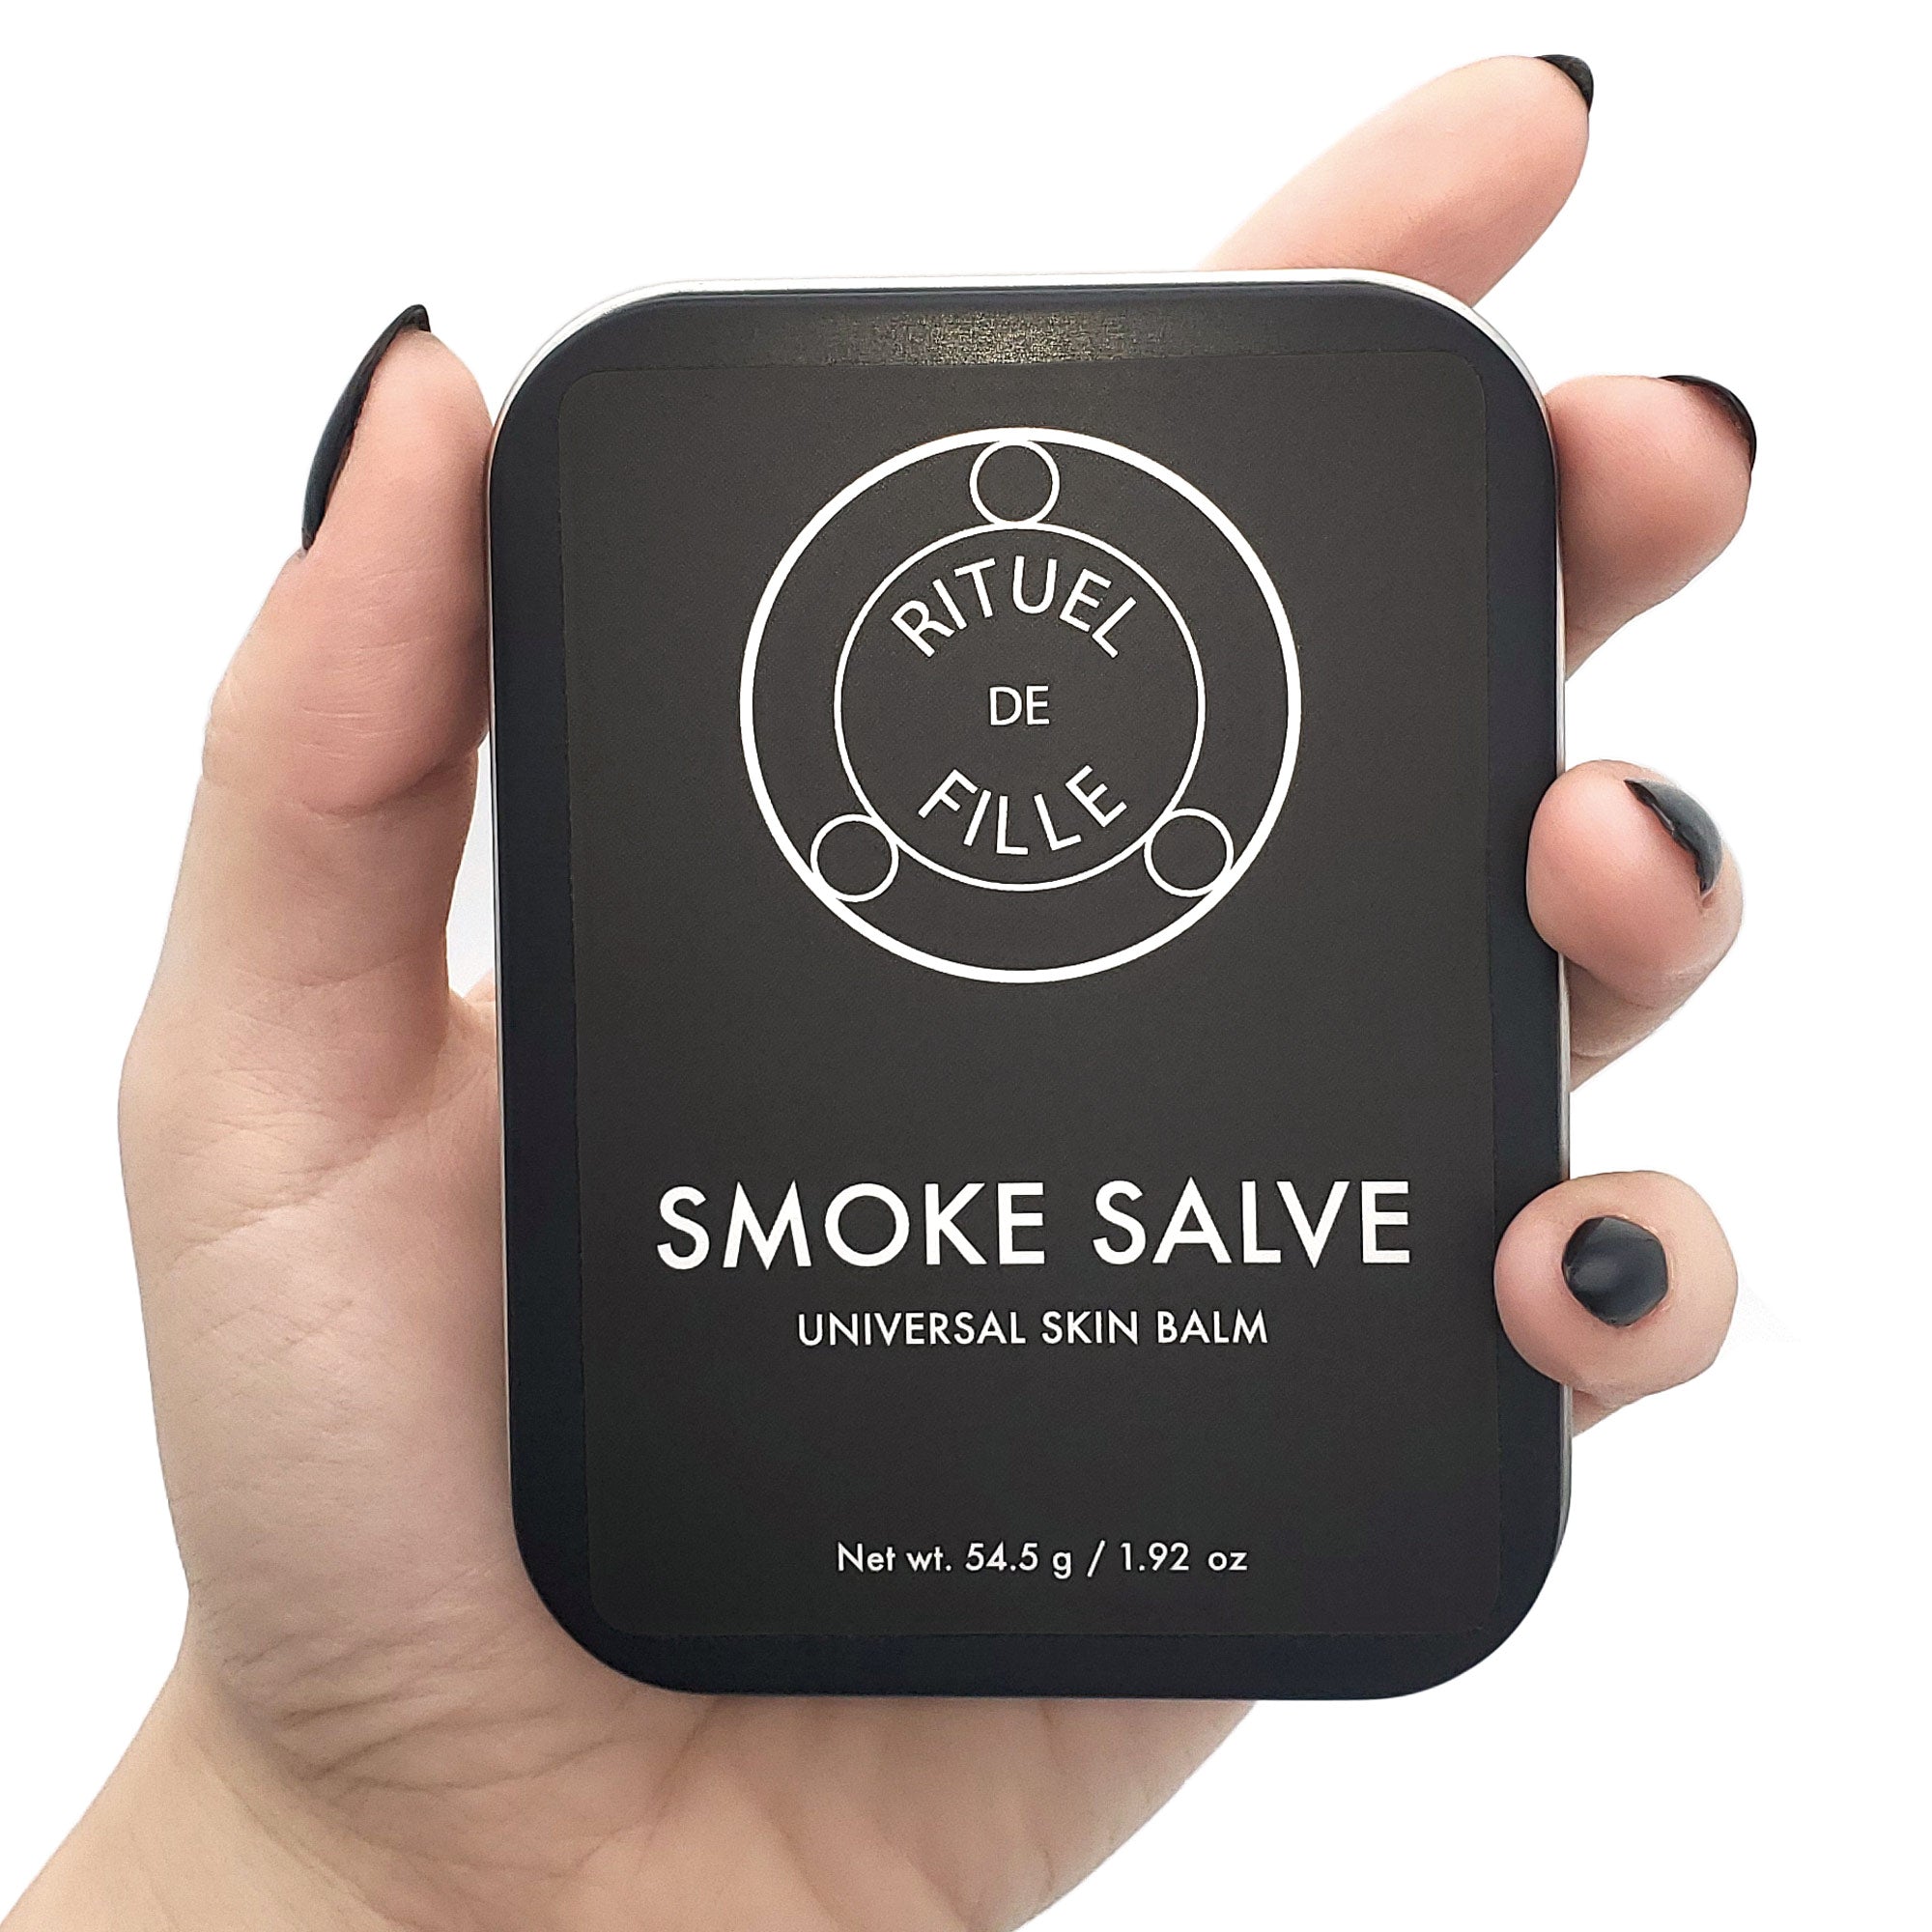 Smoke Salve Universal Skin Balm